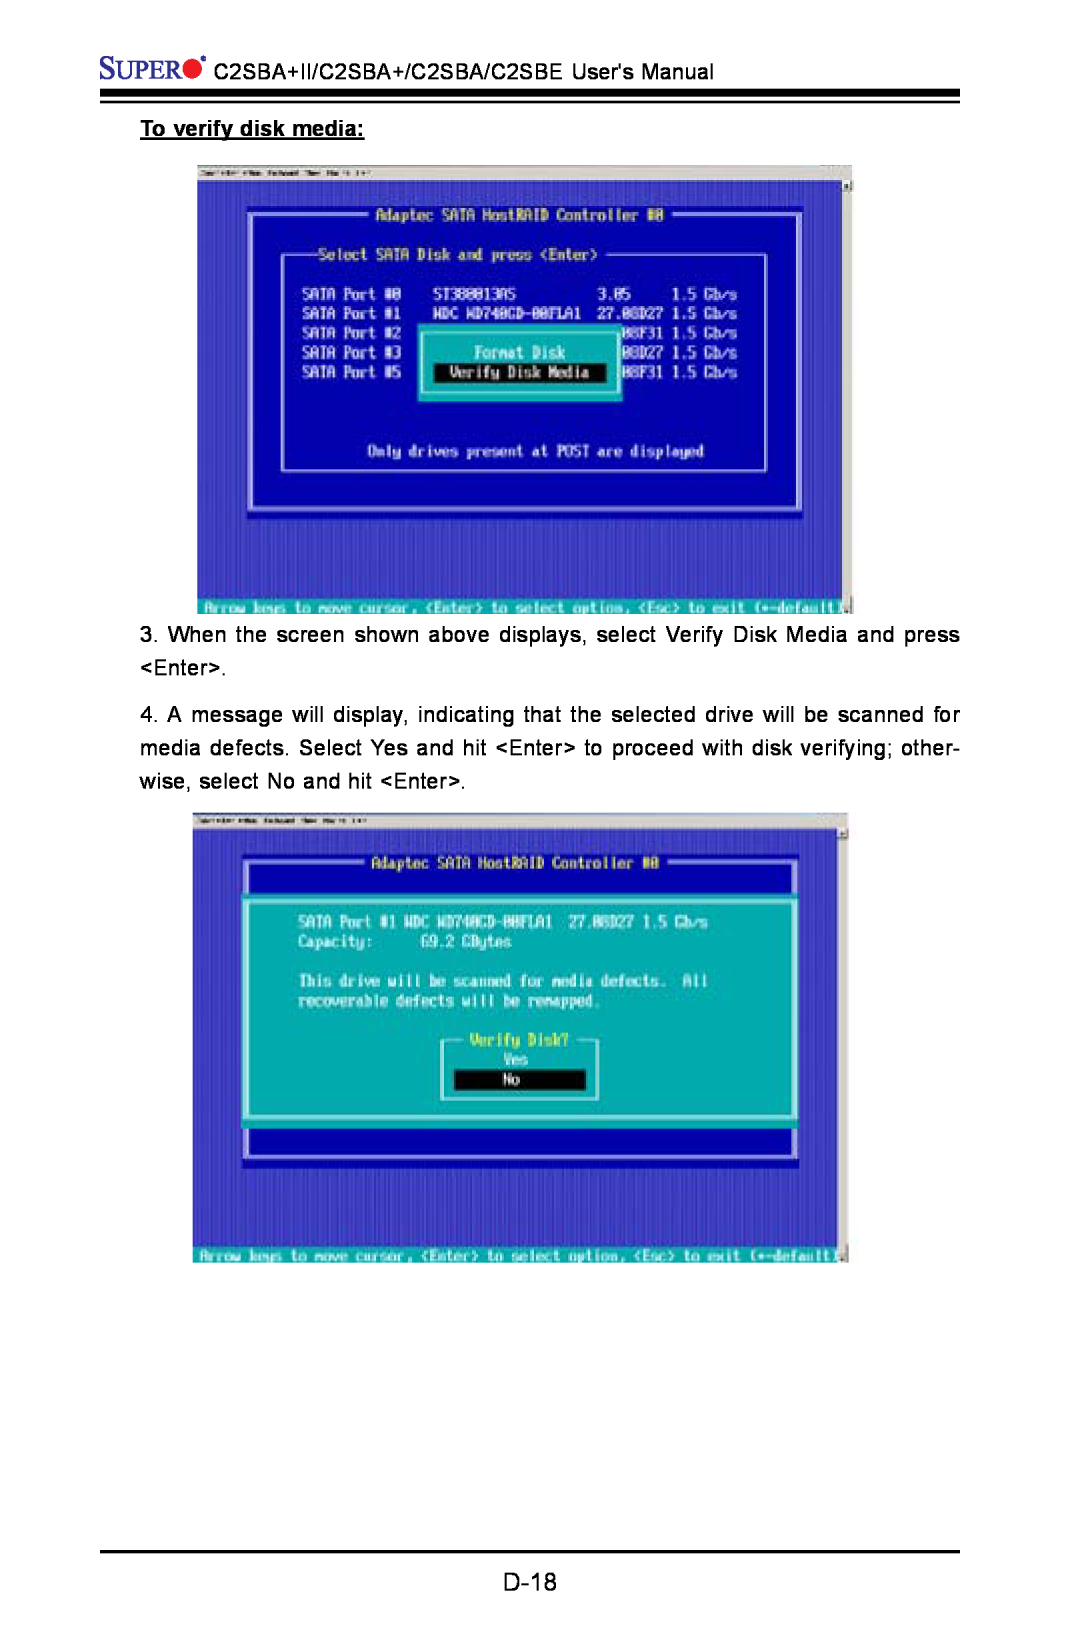 SUPER MICRO Computer C2SBE, C2SBA+II user manual D-18, To verify disk media 